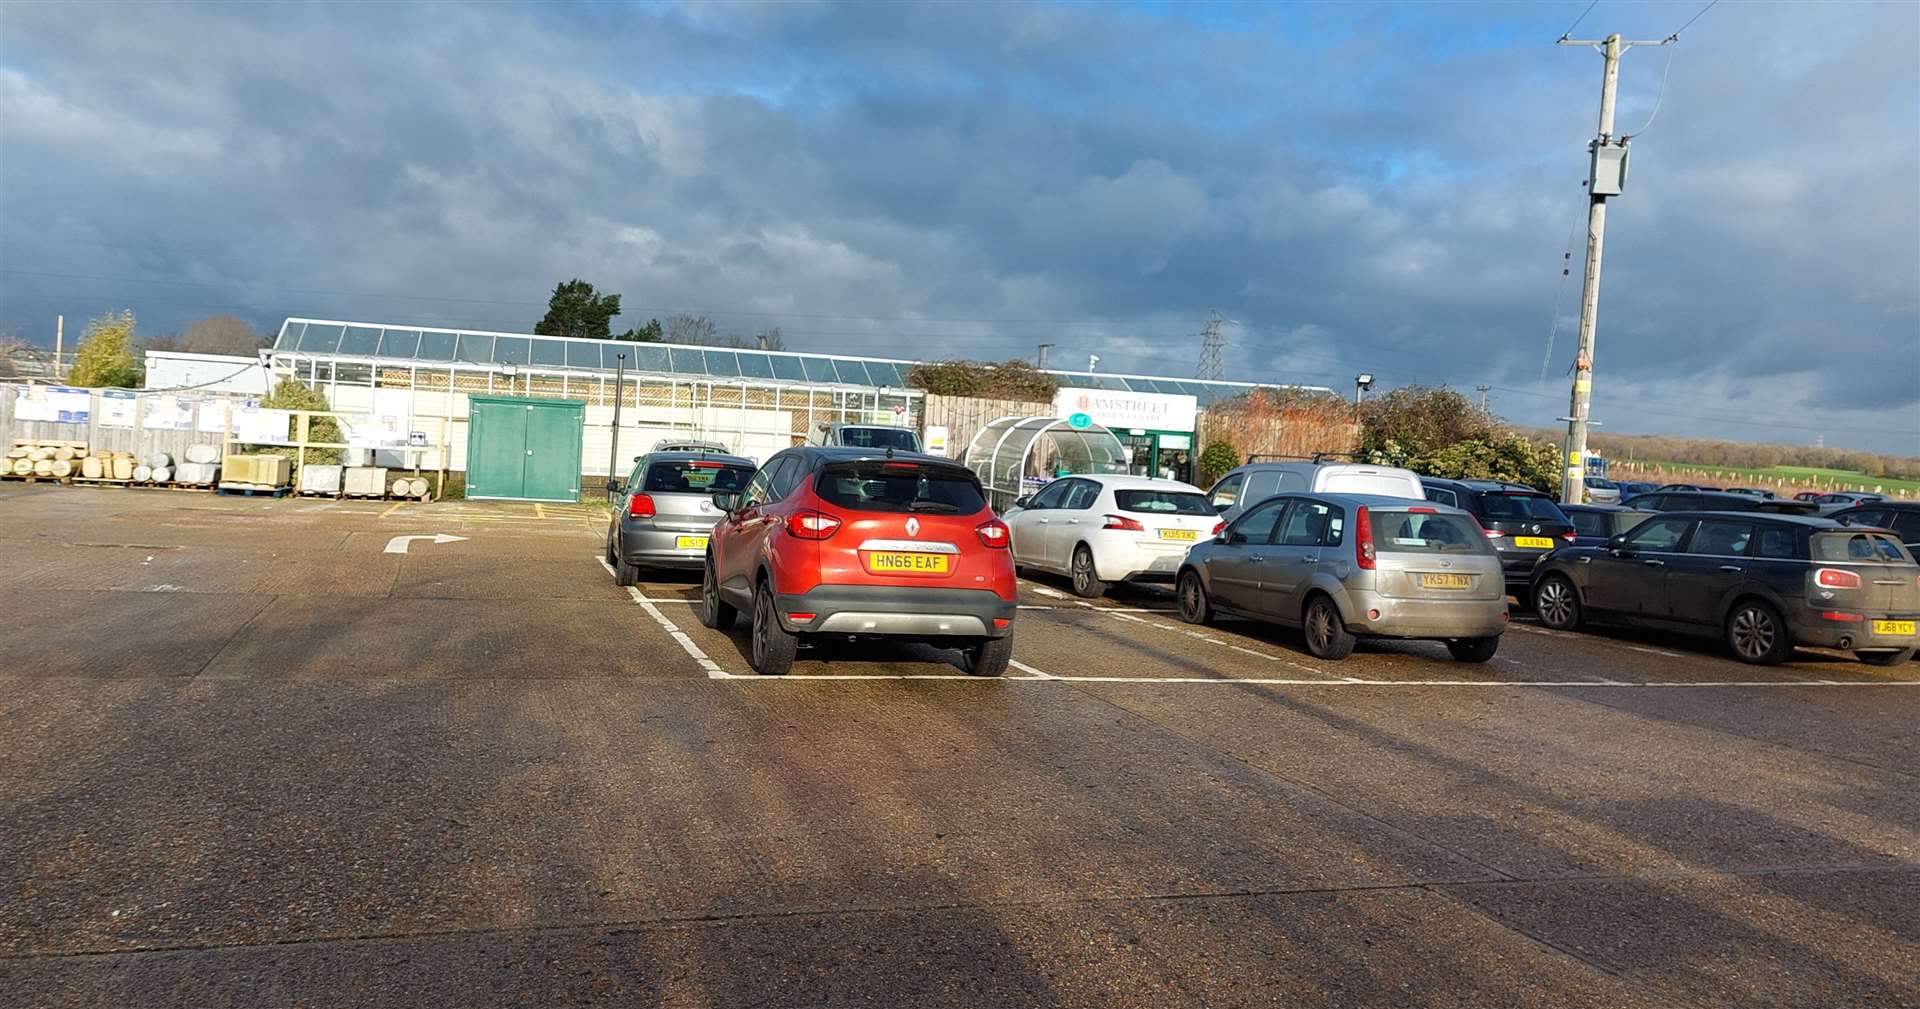 Plans show the new car park could have 139 spaces